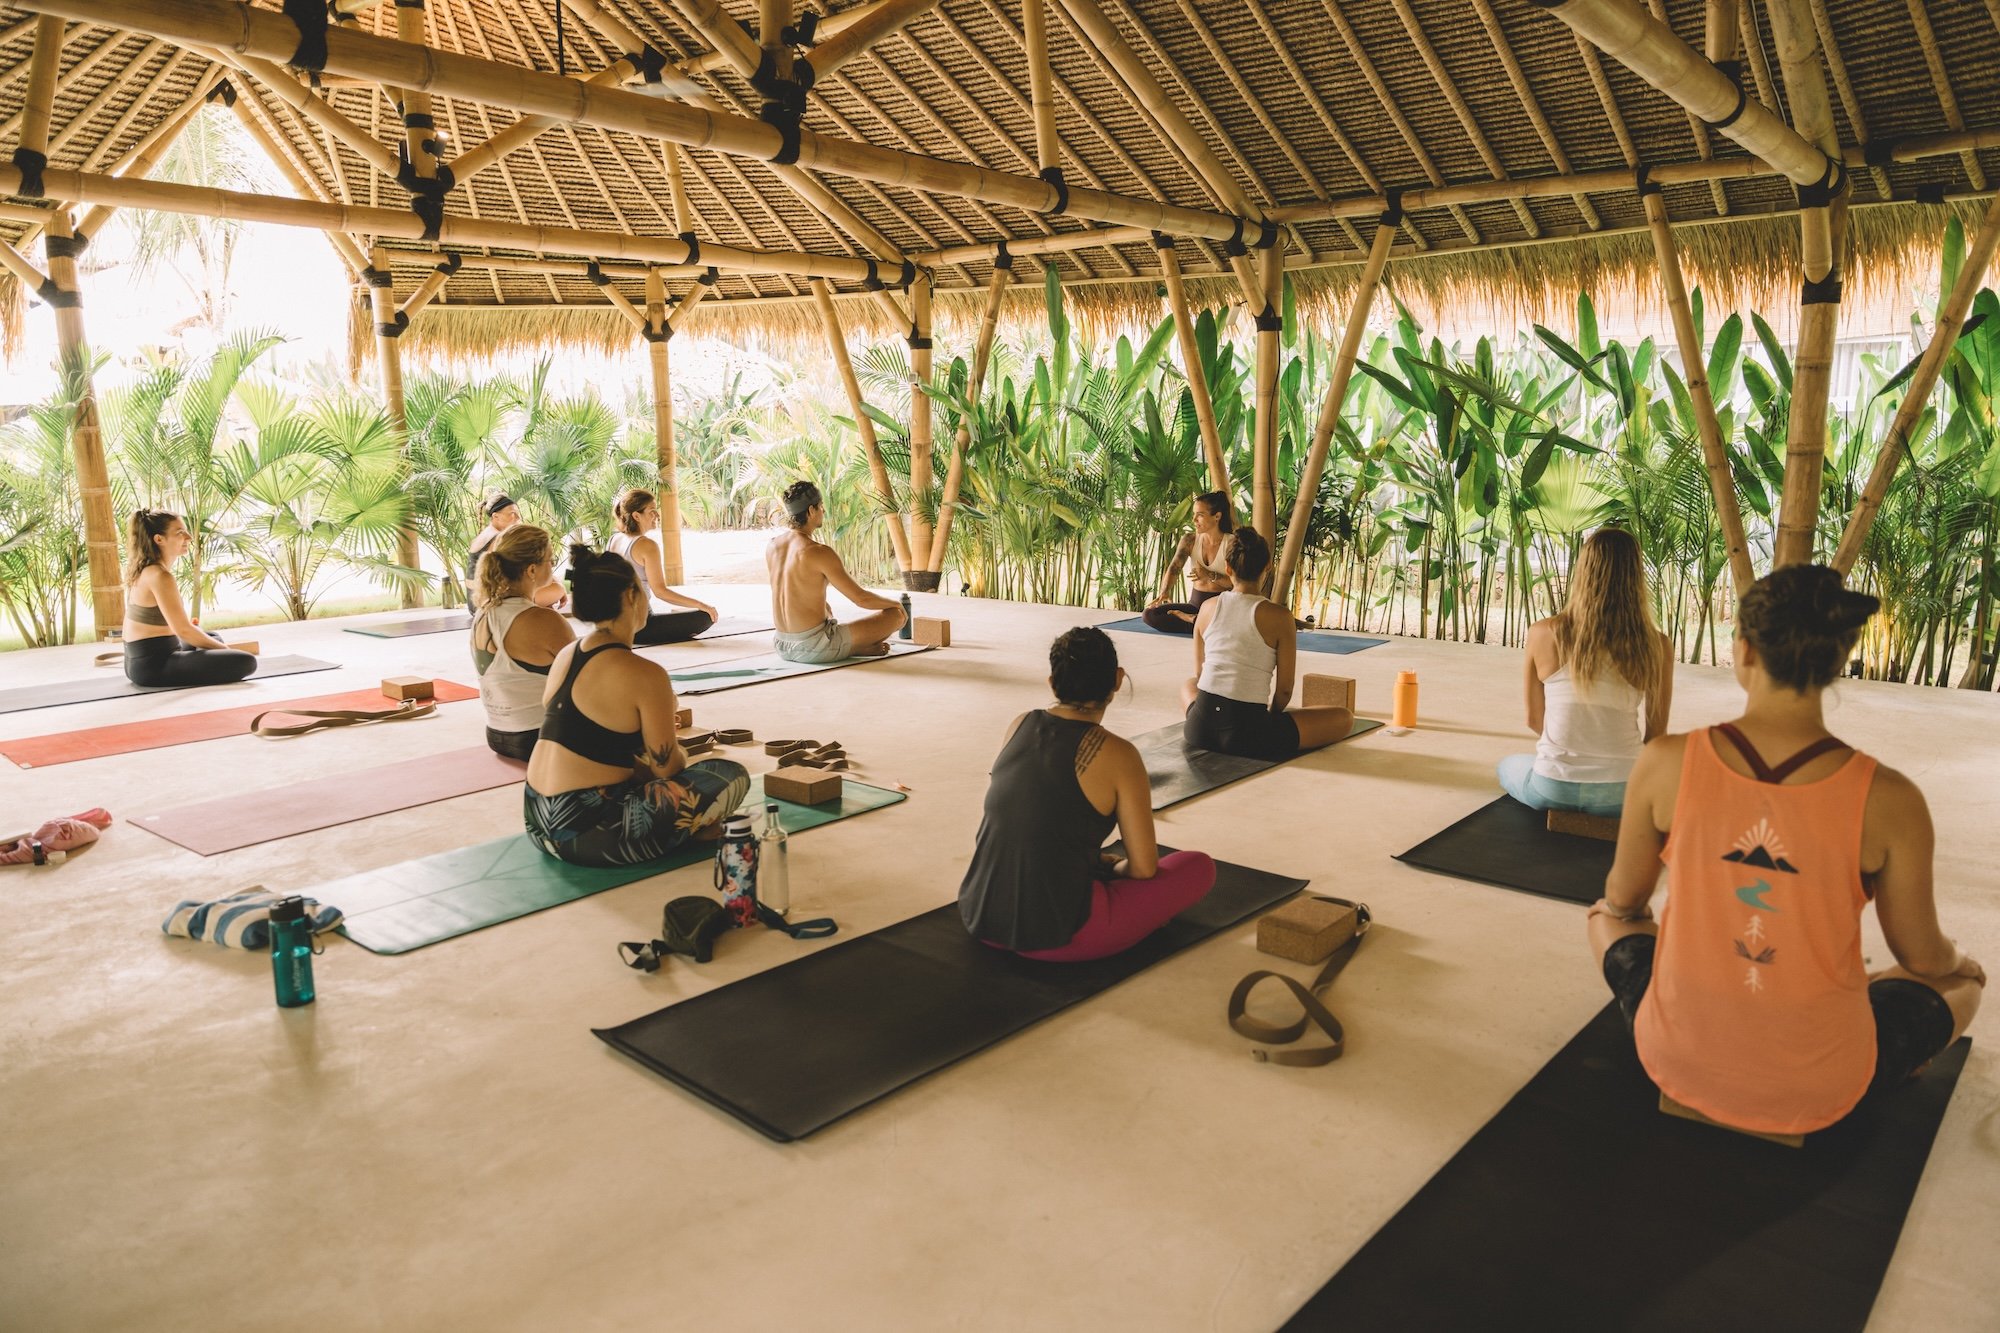 The Secrets of Successful Yoga Retreats: 4 Yoga Teachers Share